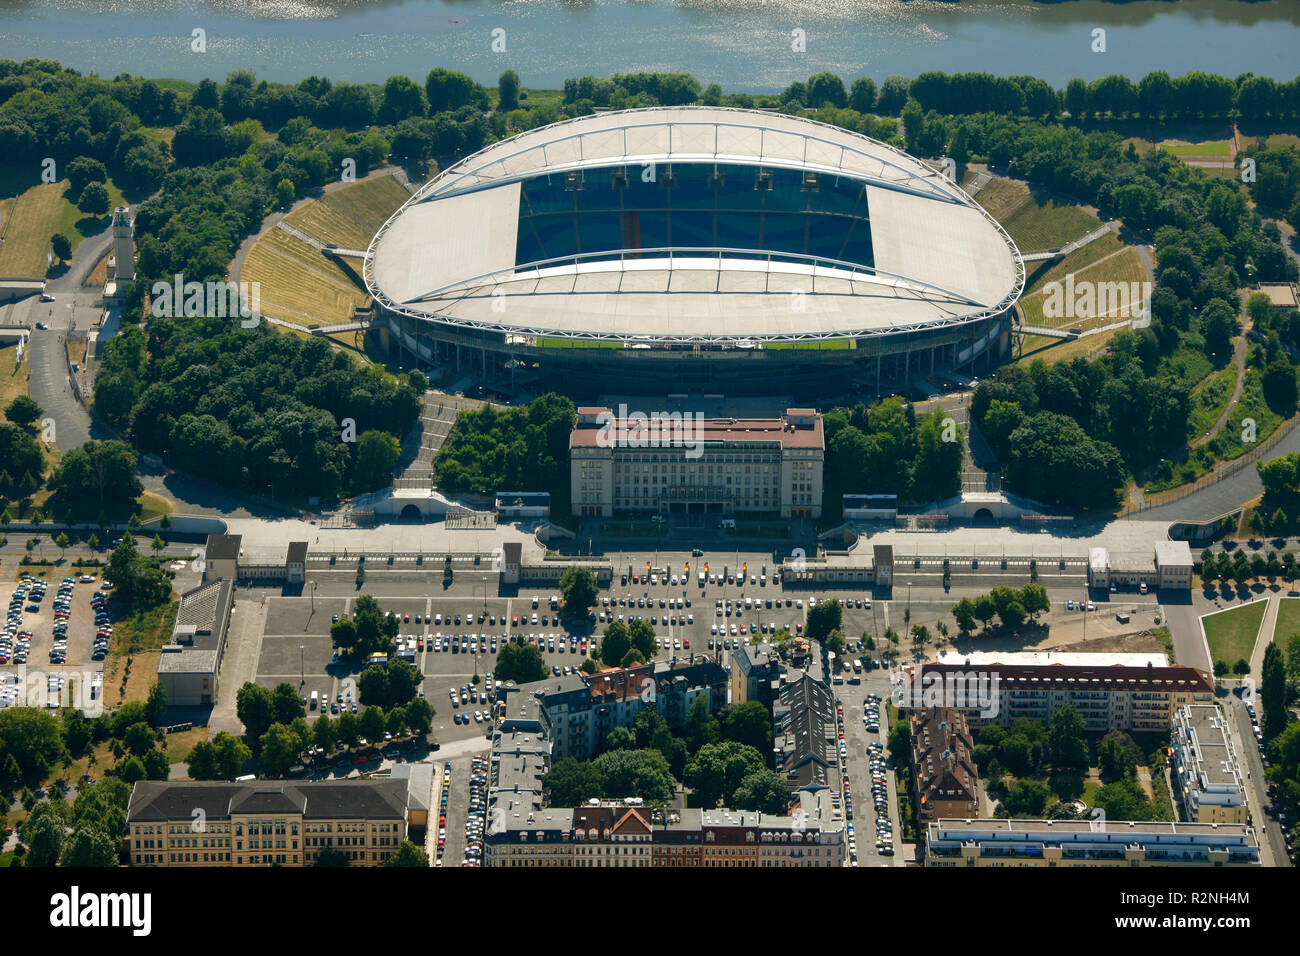 Aerial view, Zentralstadion, Elsterbecken, Public Viewing in the stadium, aerial view, Pfaffendorfer Straße 29, Leipzig, Saxony, Germany, Europe, Stock Photo